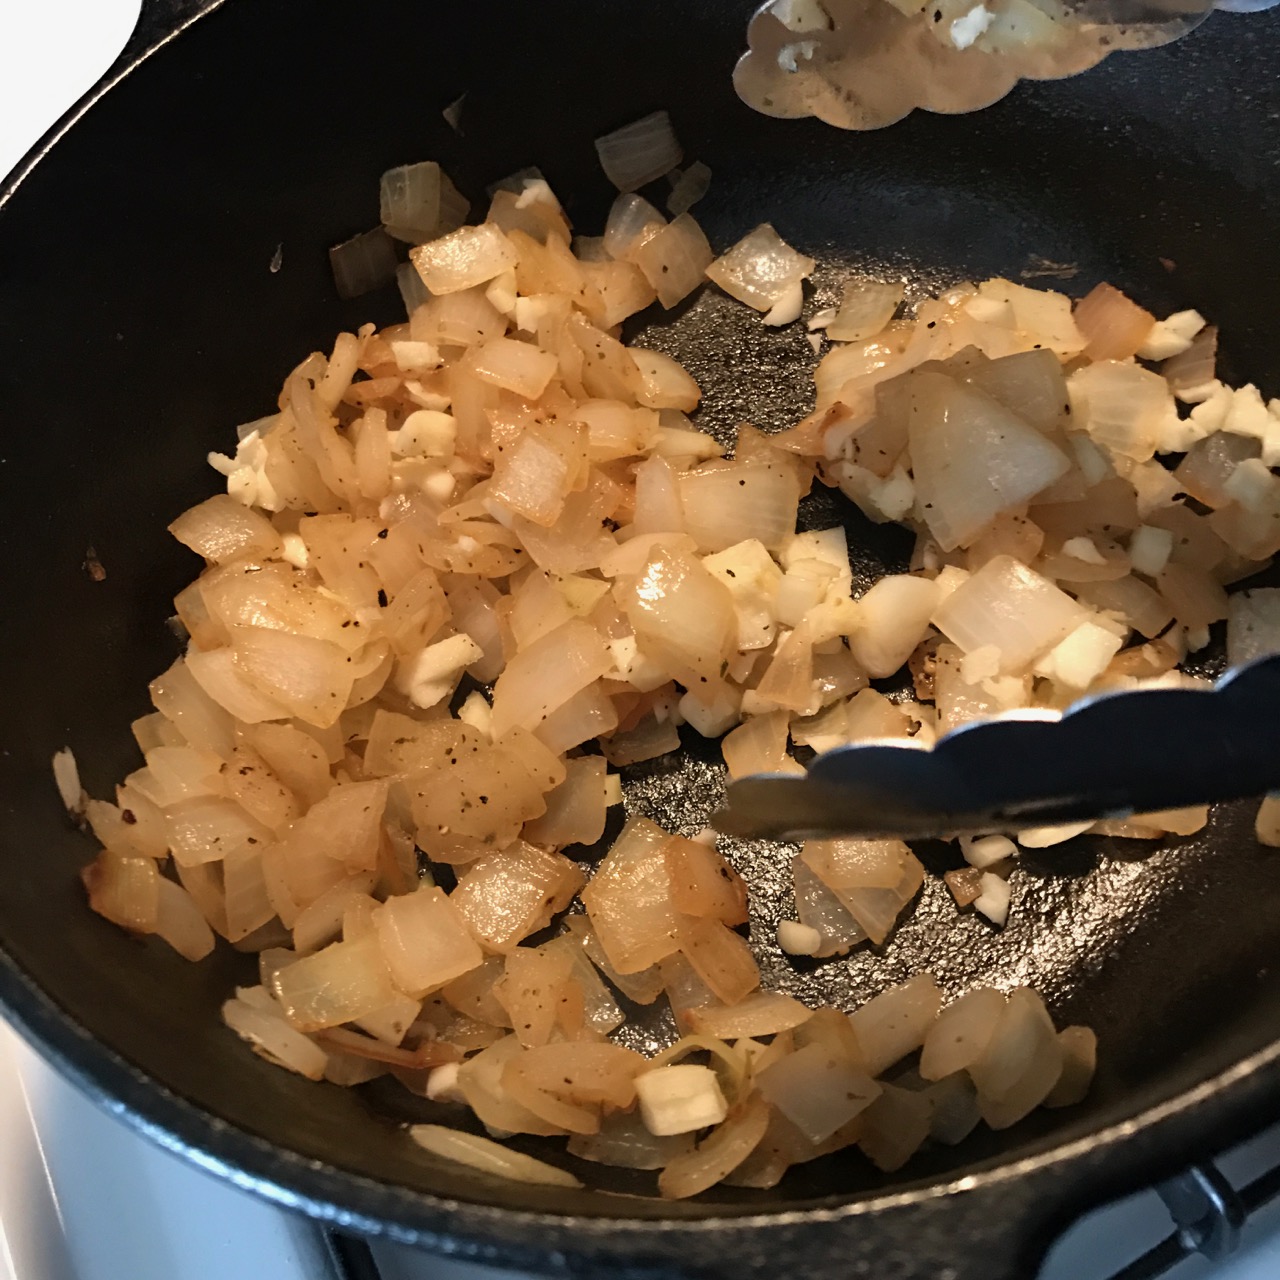 oniony onions